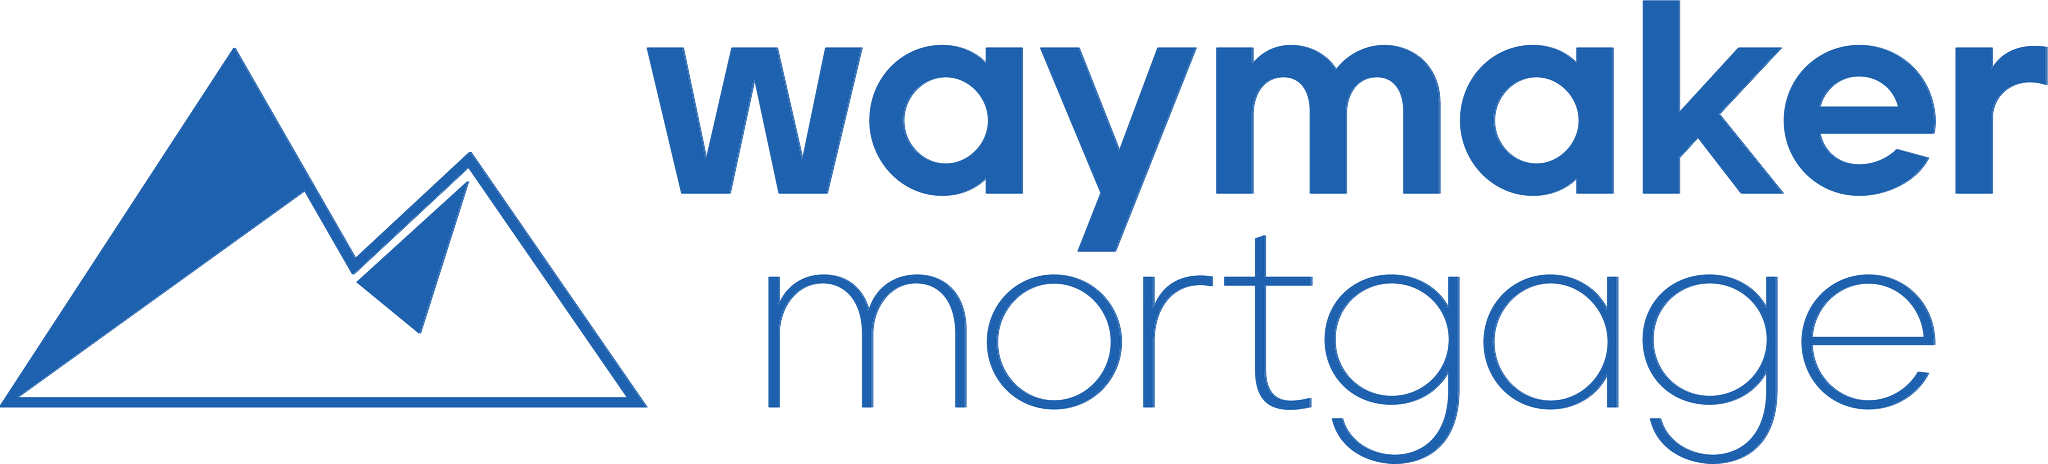 Waymaker Mortgage